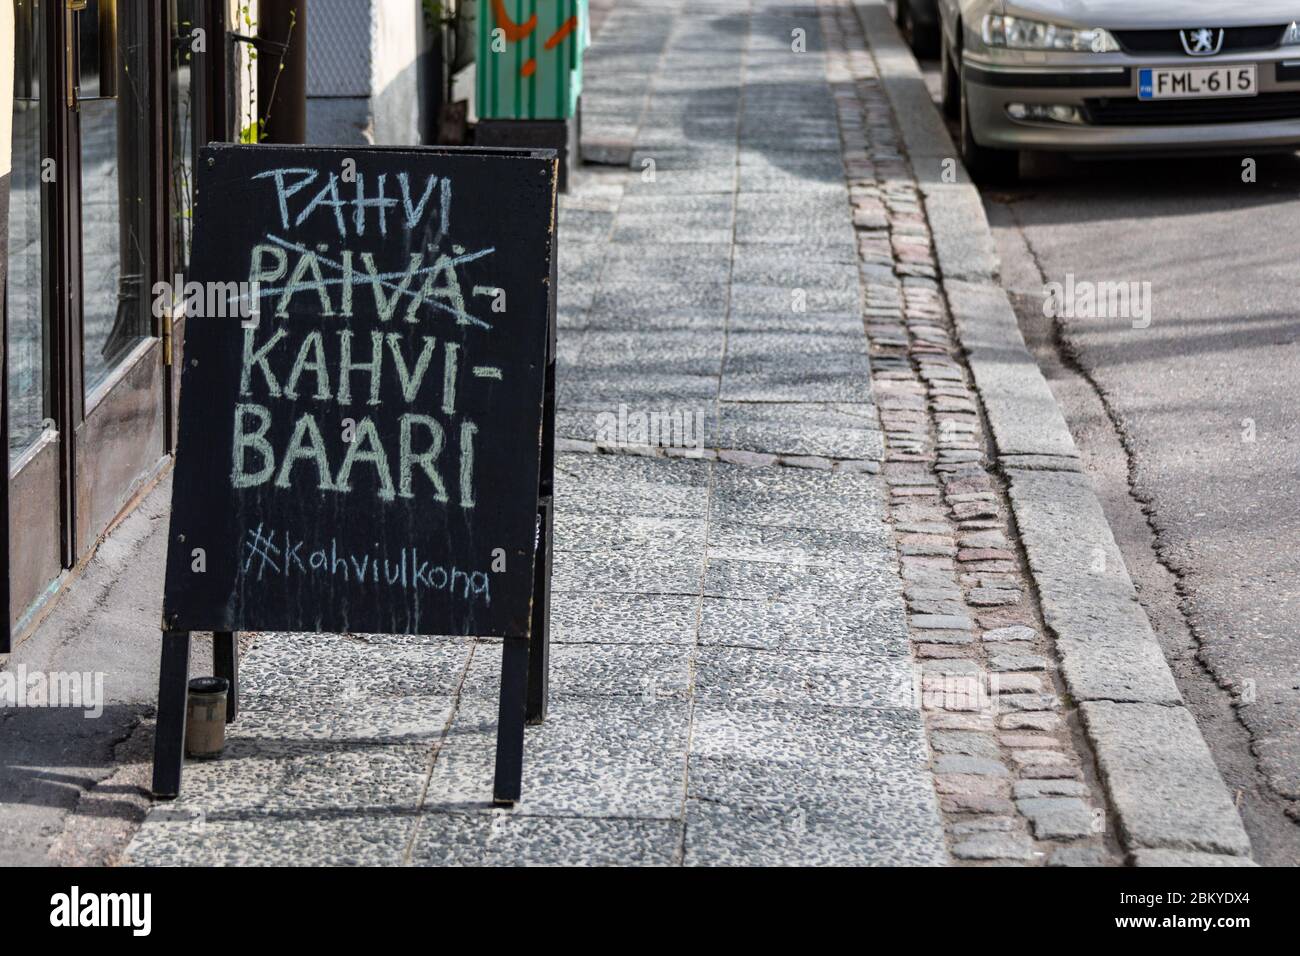 Café chalkboard street sign advertising take-away-coffees during coronavirus outbreak in Vallila district of Helsinki, Finland Stock Photo